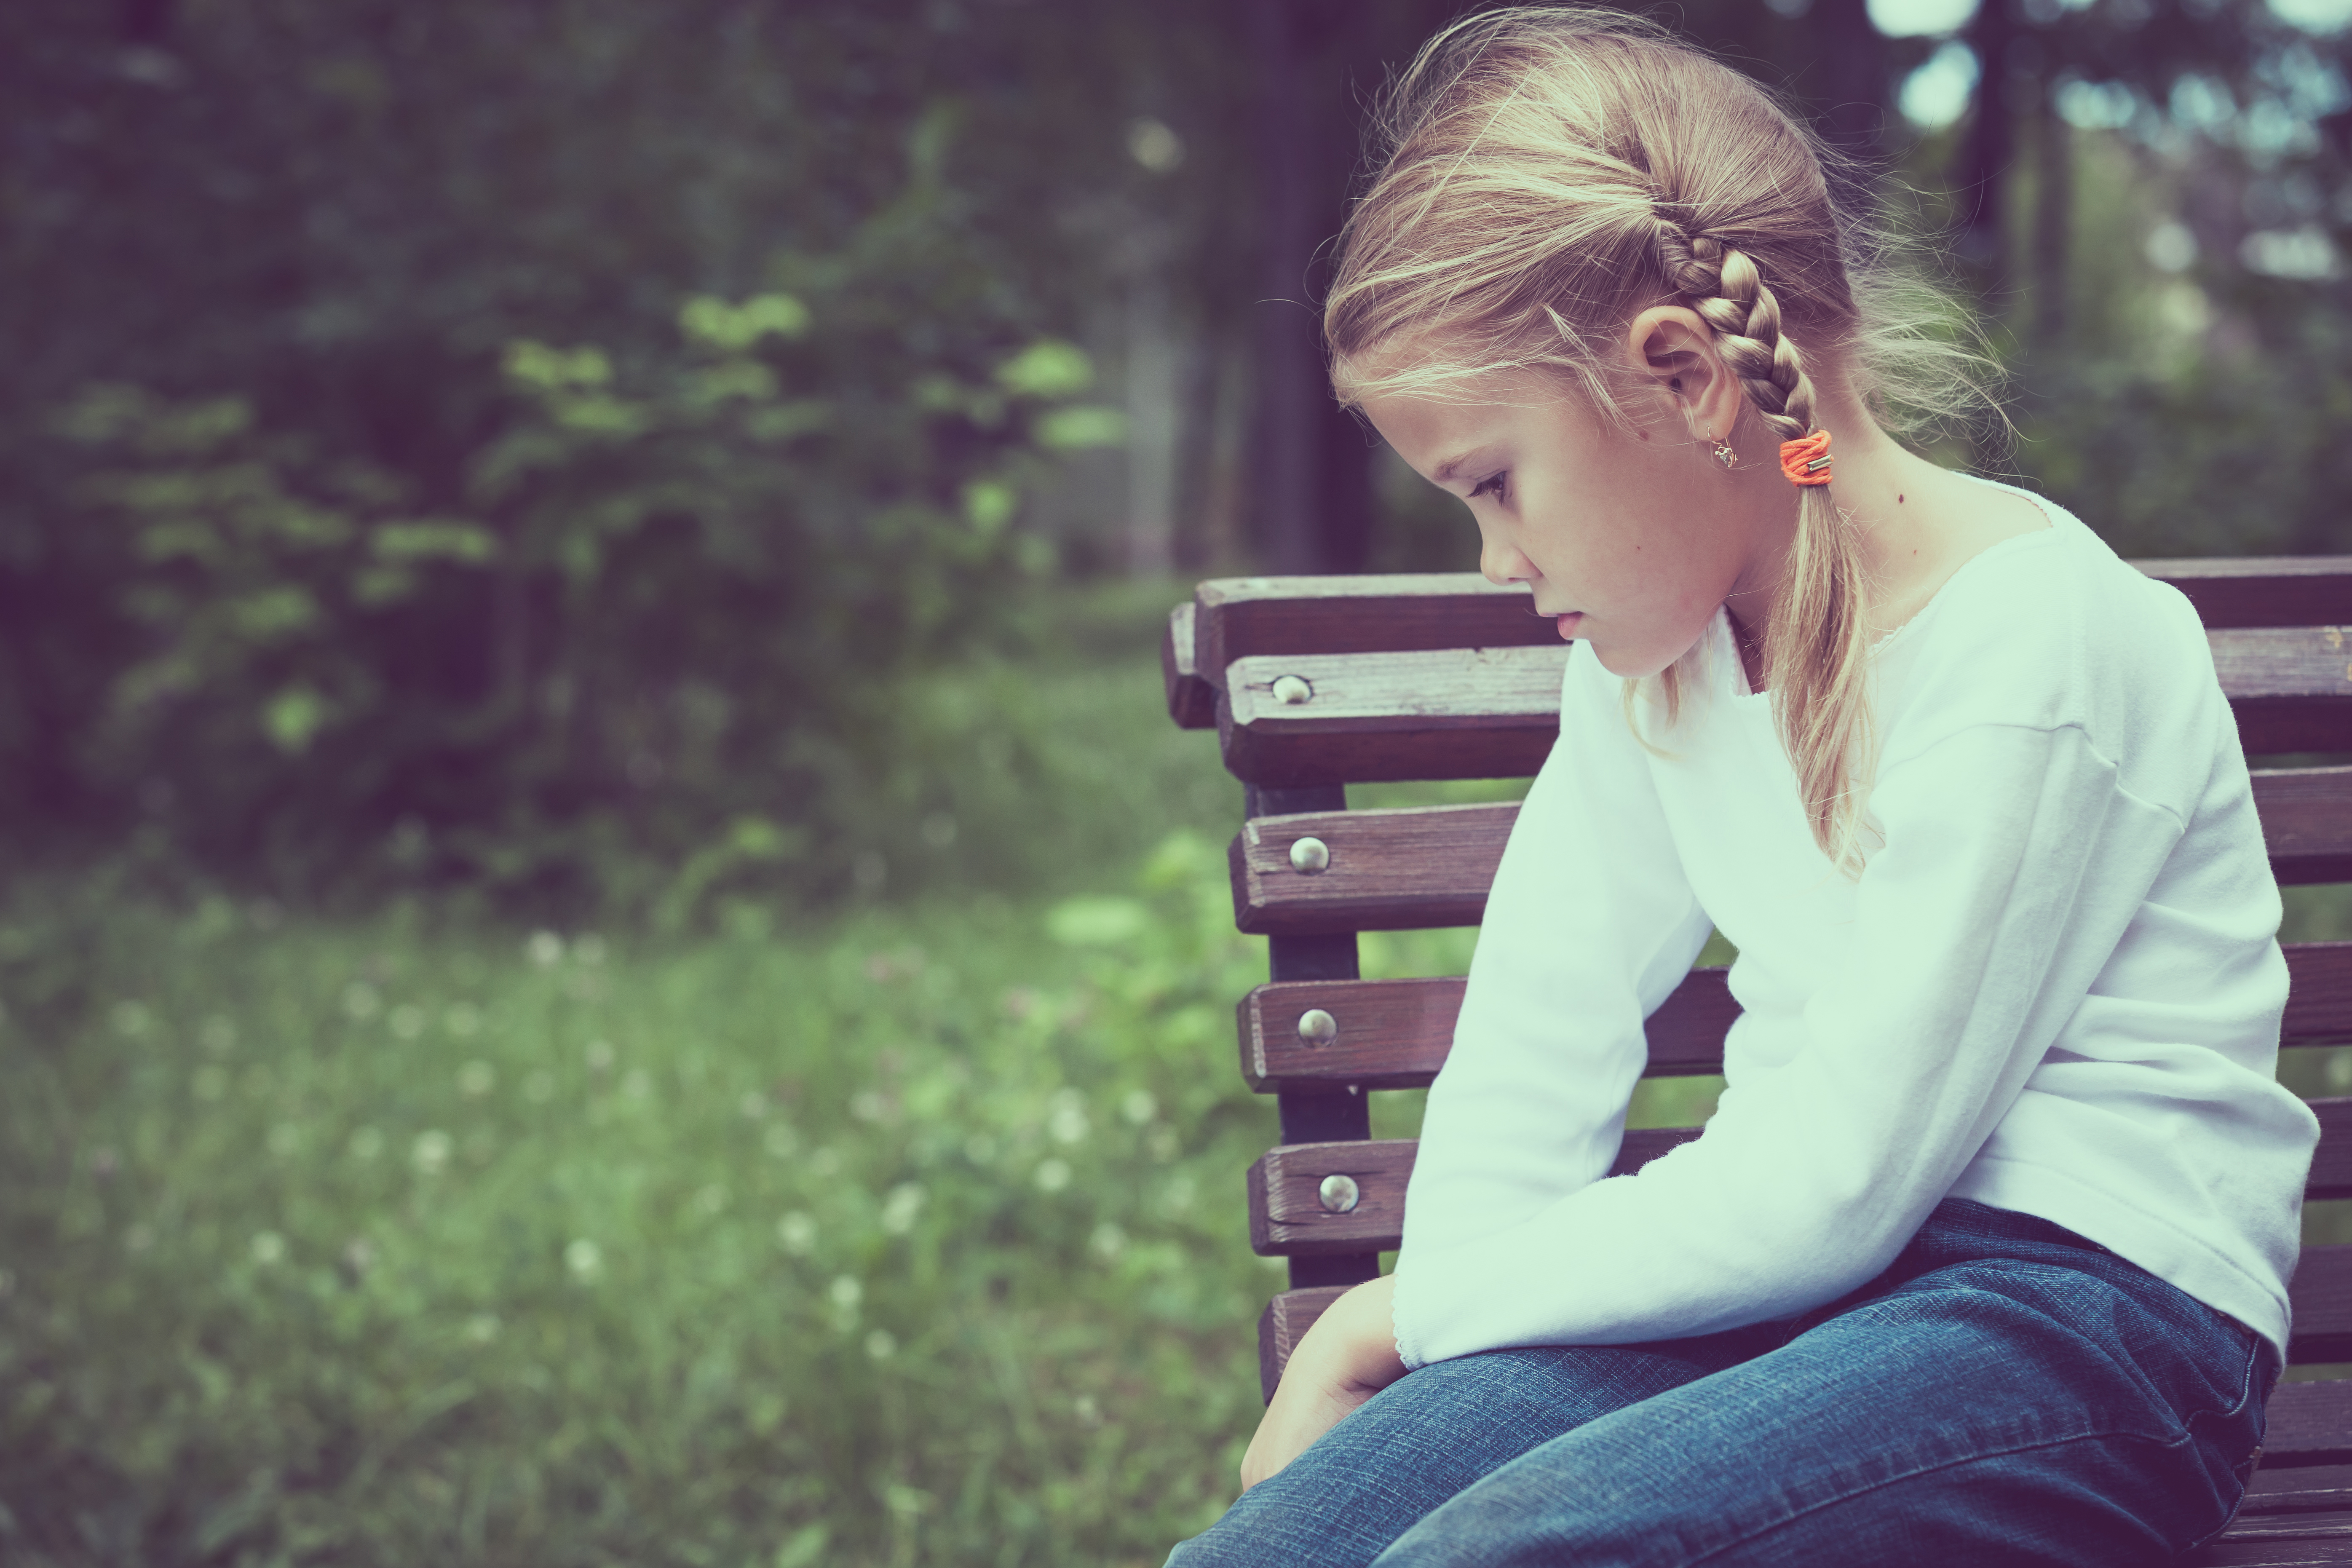 A little girl sitting on a bench | Source: Shutterstock